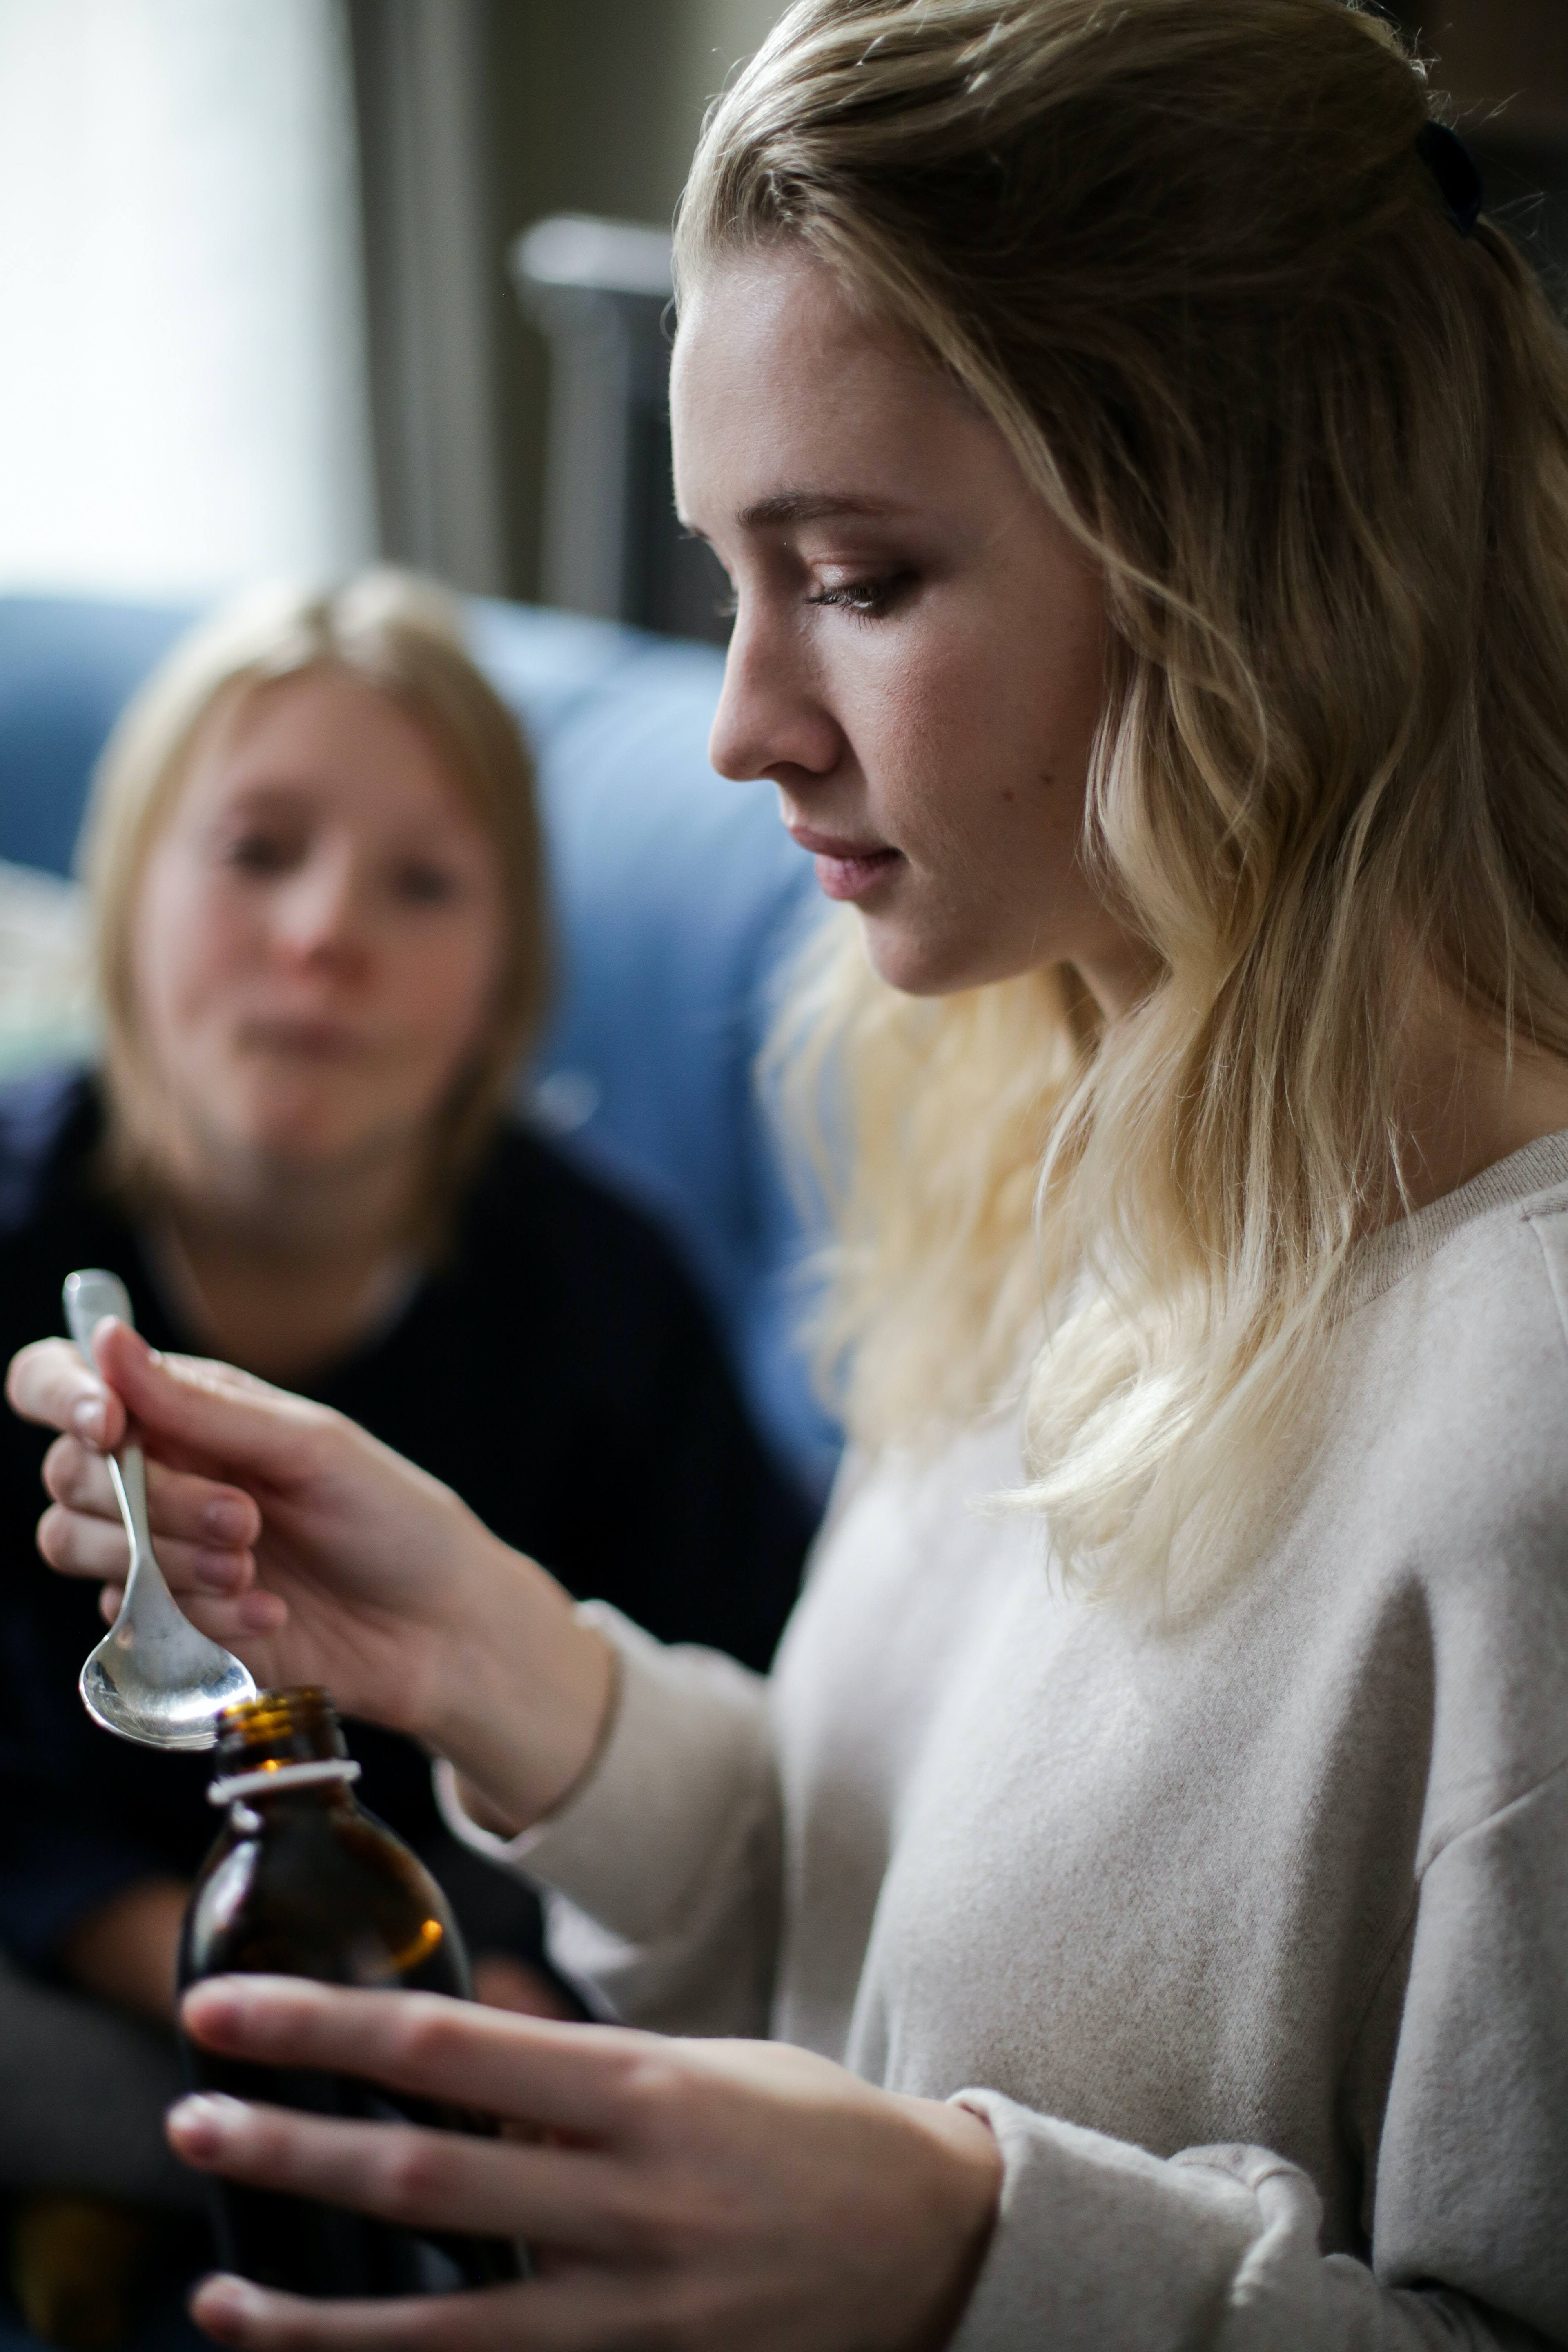 Obat Sirup Dihentikan Sementara, IDI Bontang Anjurkan Penggunaan Tablet hingga Puyer untuk Anak